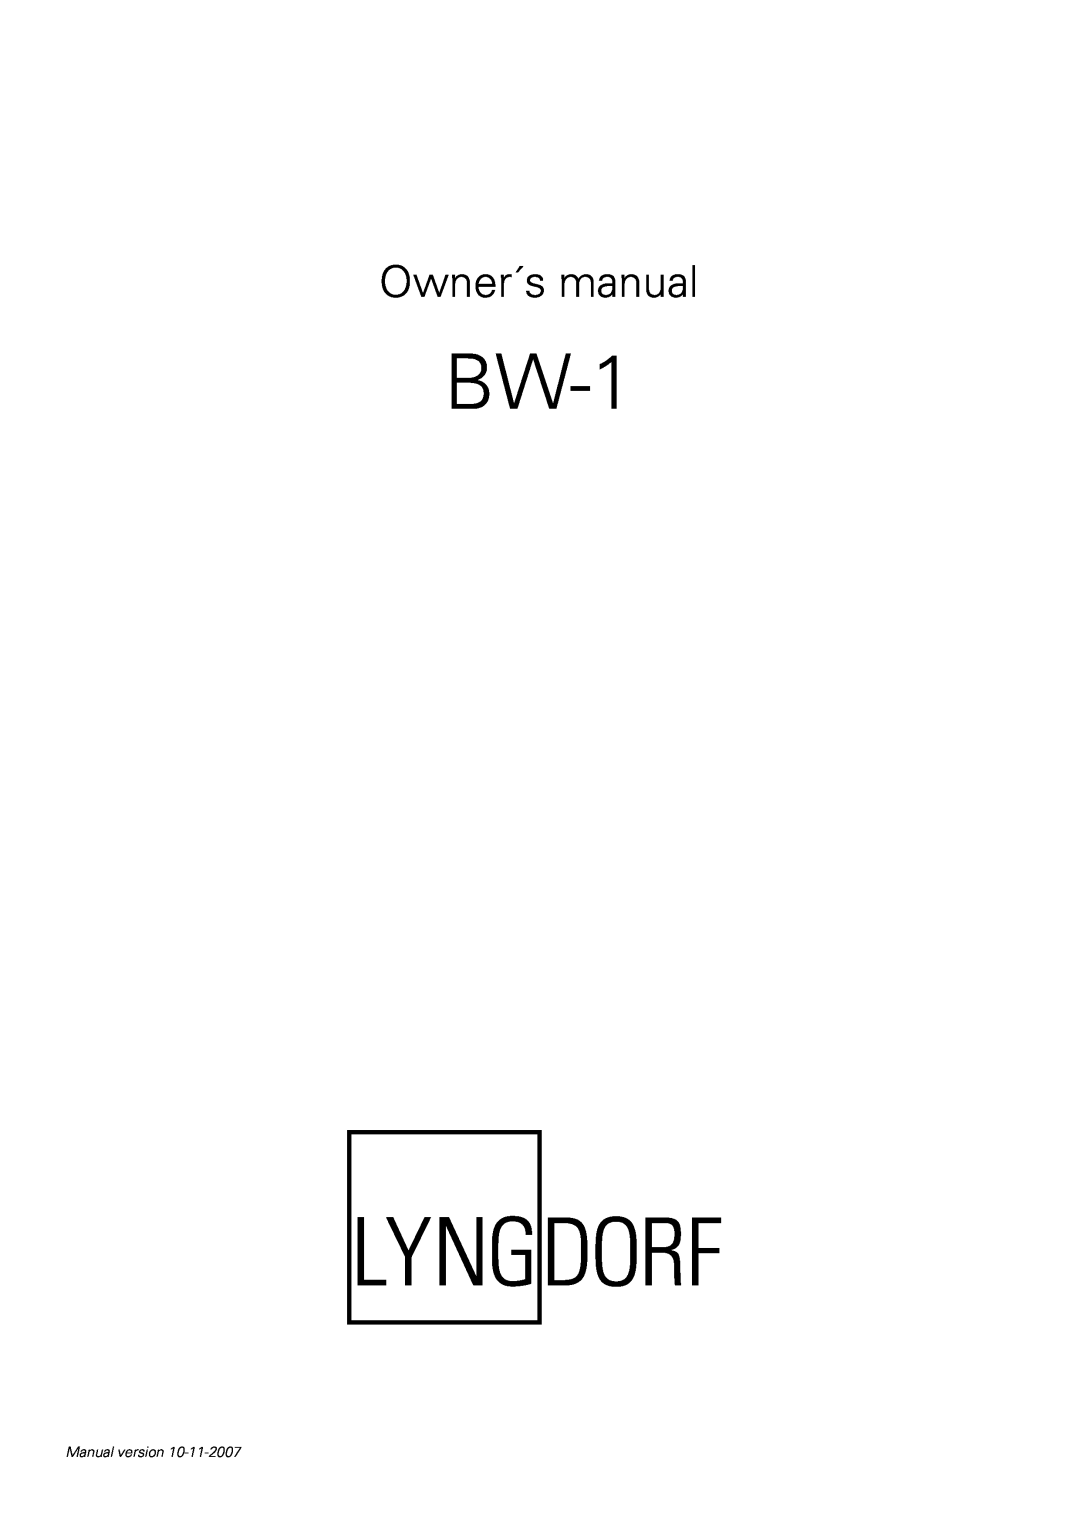 Lyngdorf Audio BW-1 owner manual Owner´s manual, Manual version 